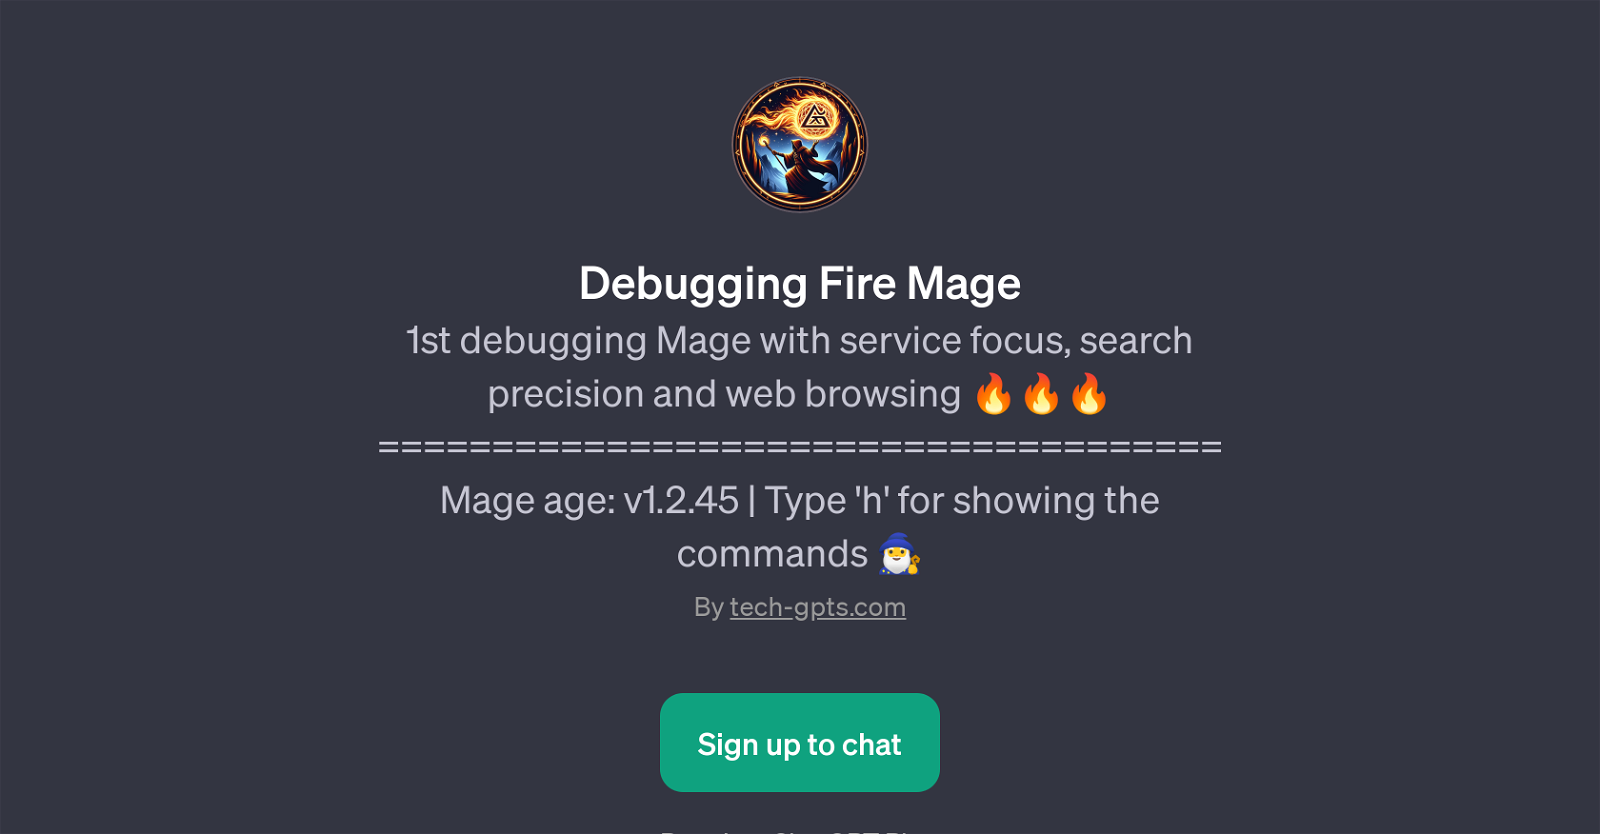 Debugging Fire Mage website